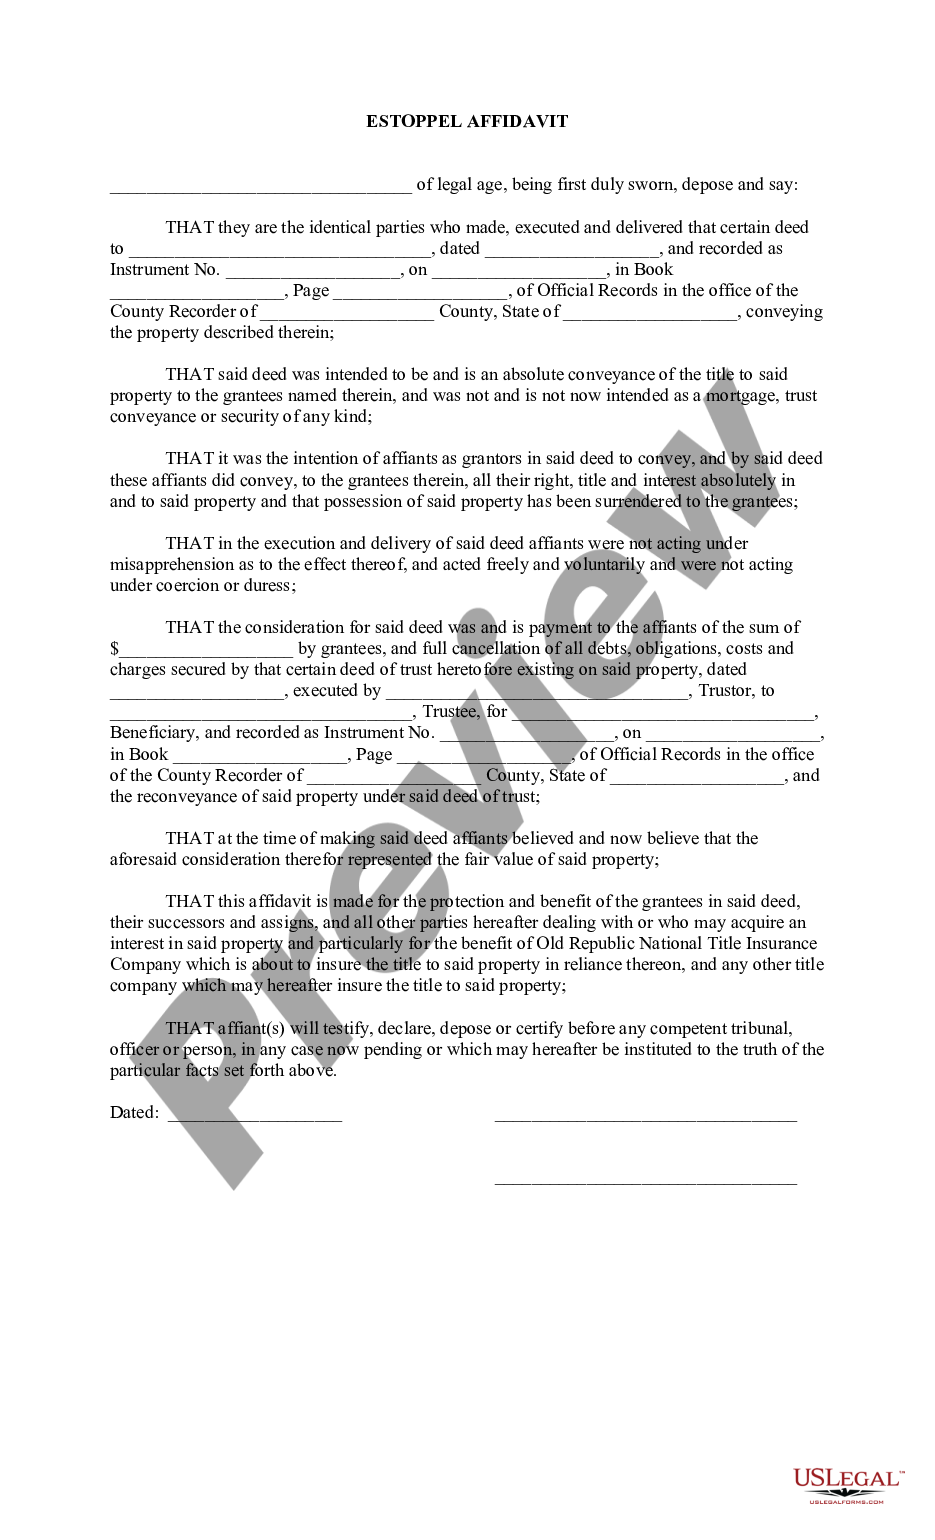 california-estoppel-affidavit-us-legal-forms